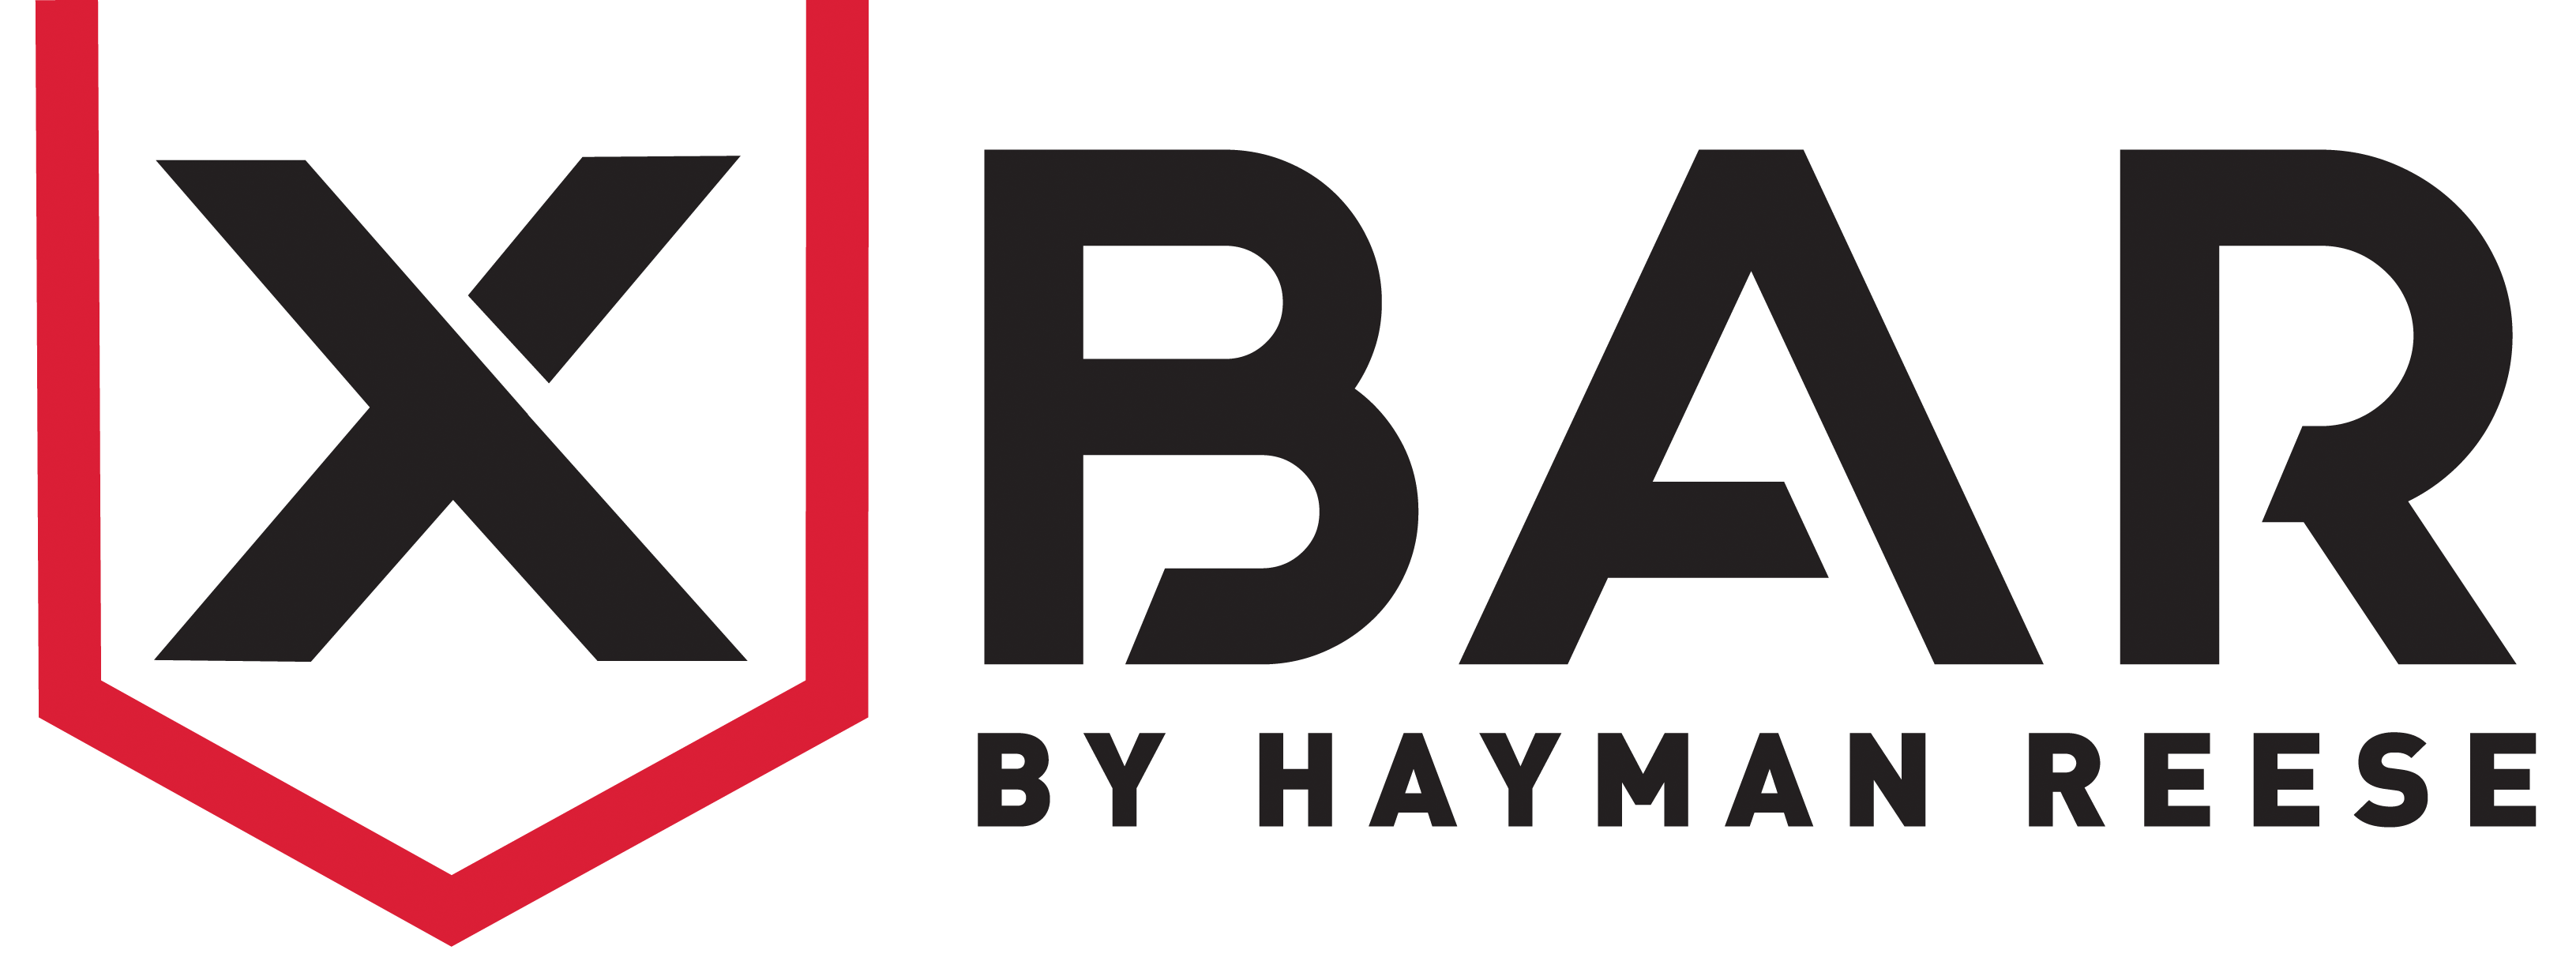 X-BAR by Hayman Reese